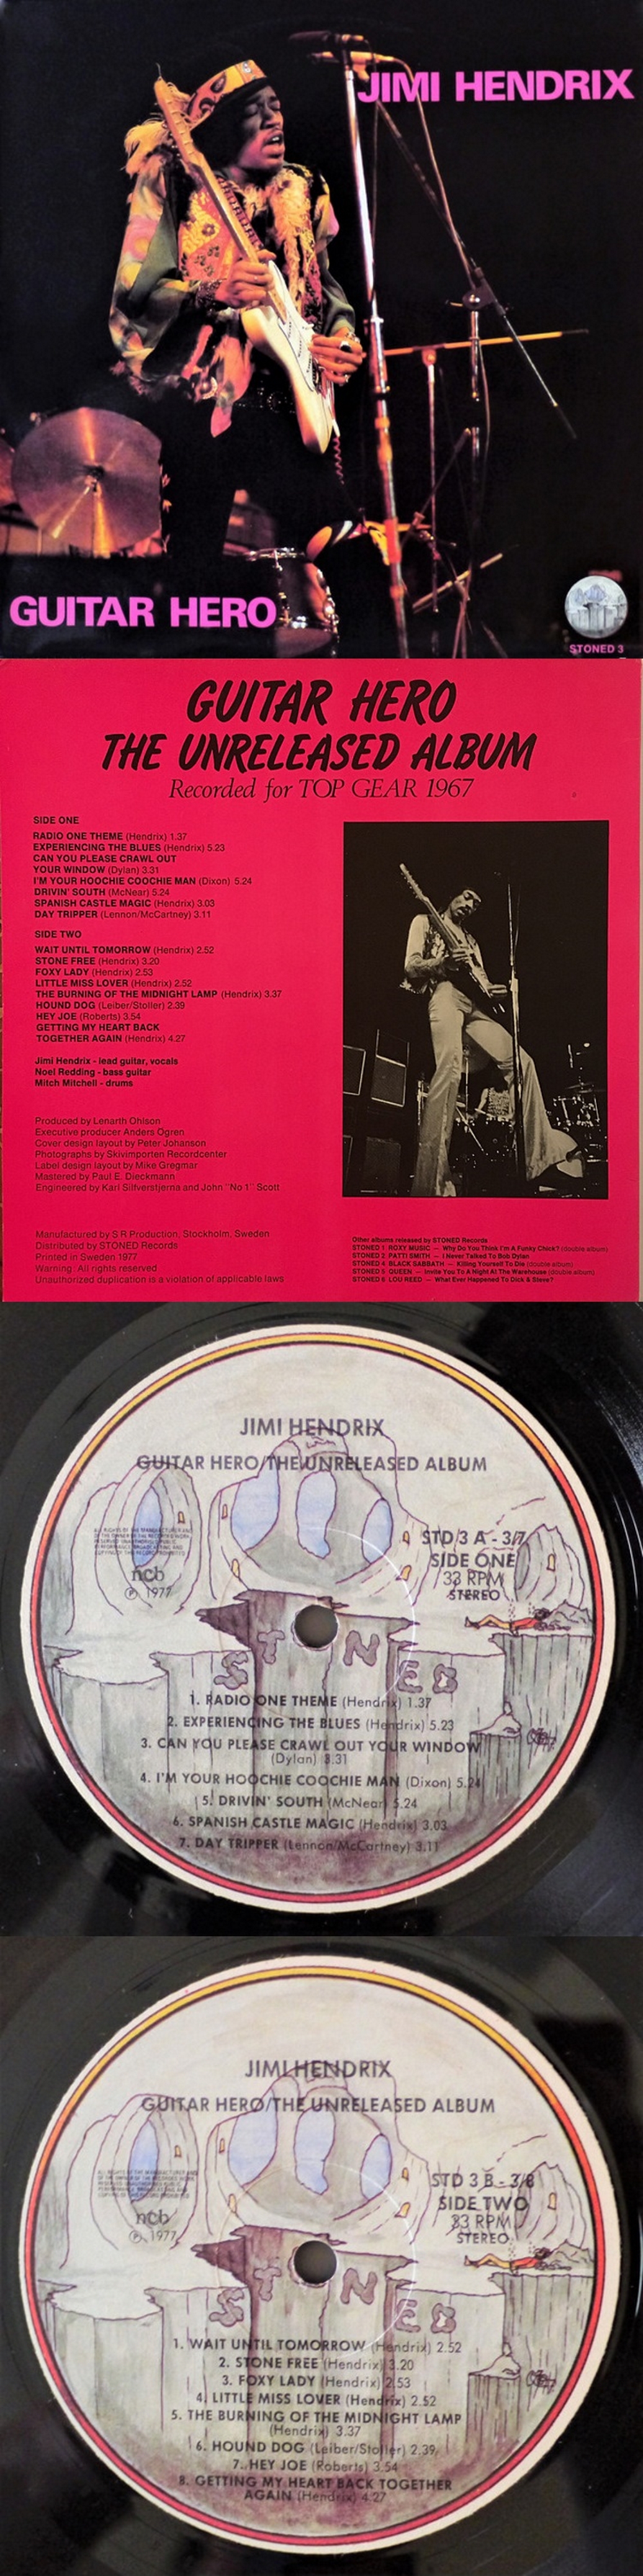 Stoned Records - Jimi Hendrix Guitar Hero